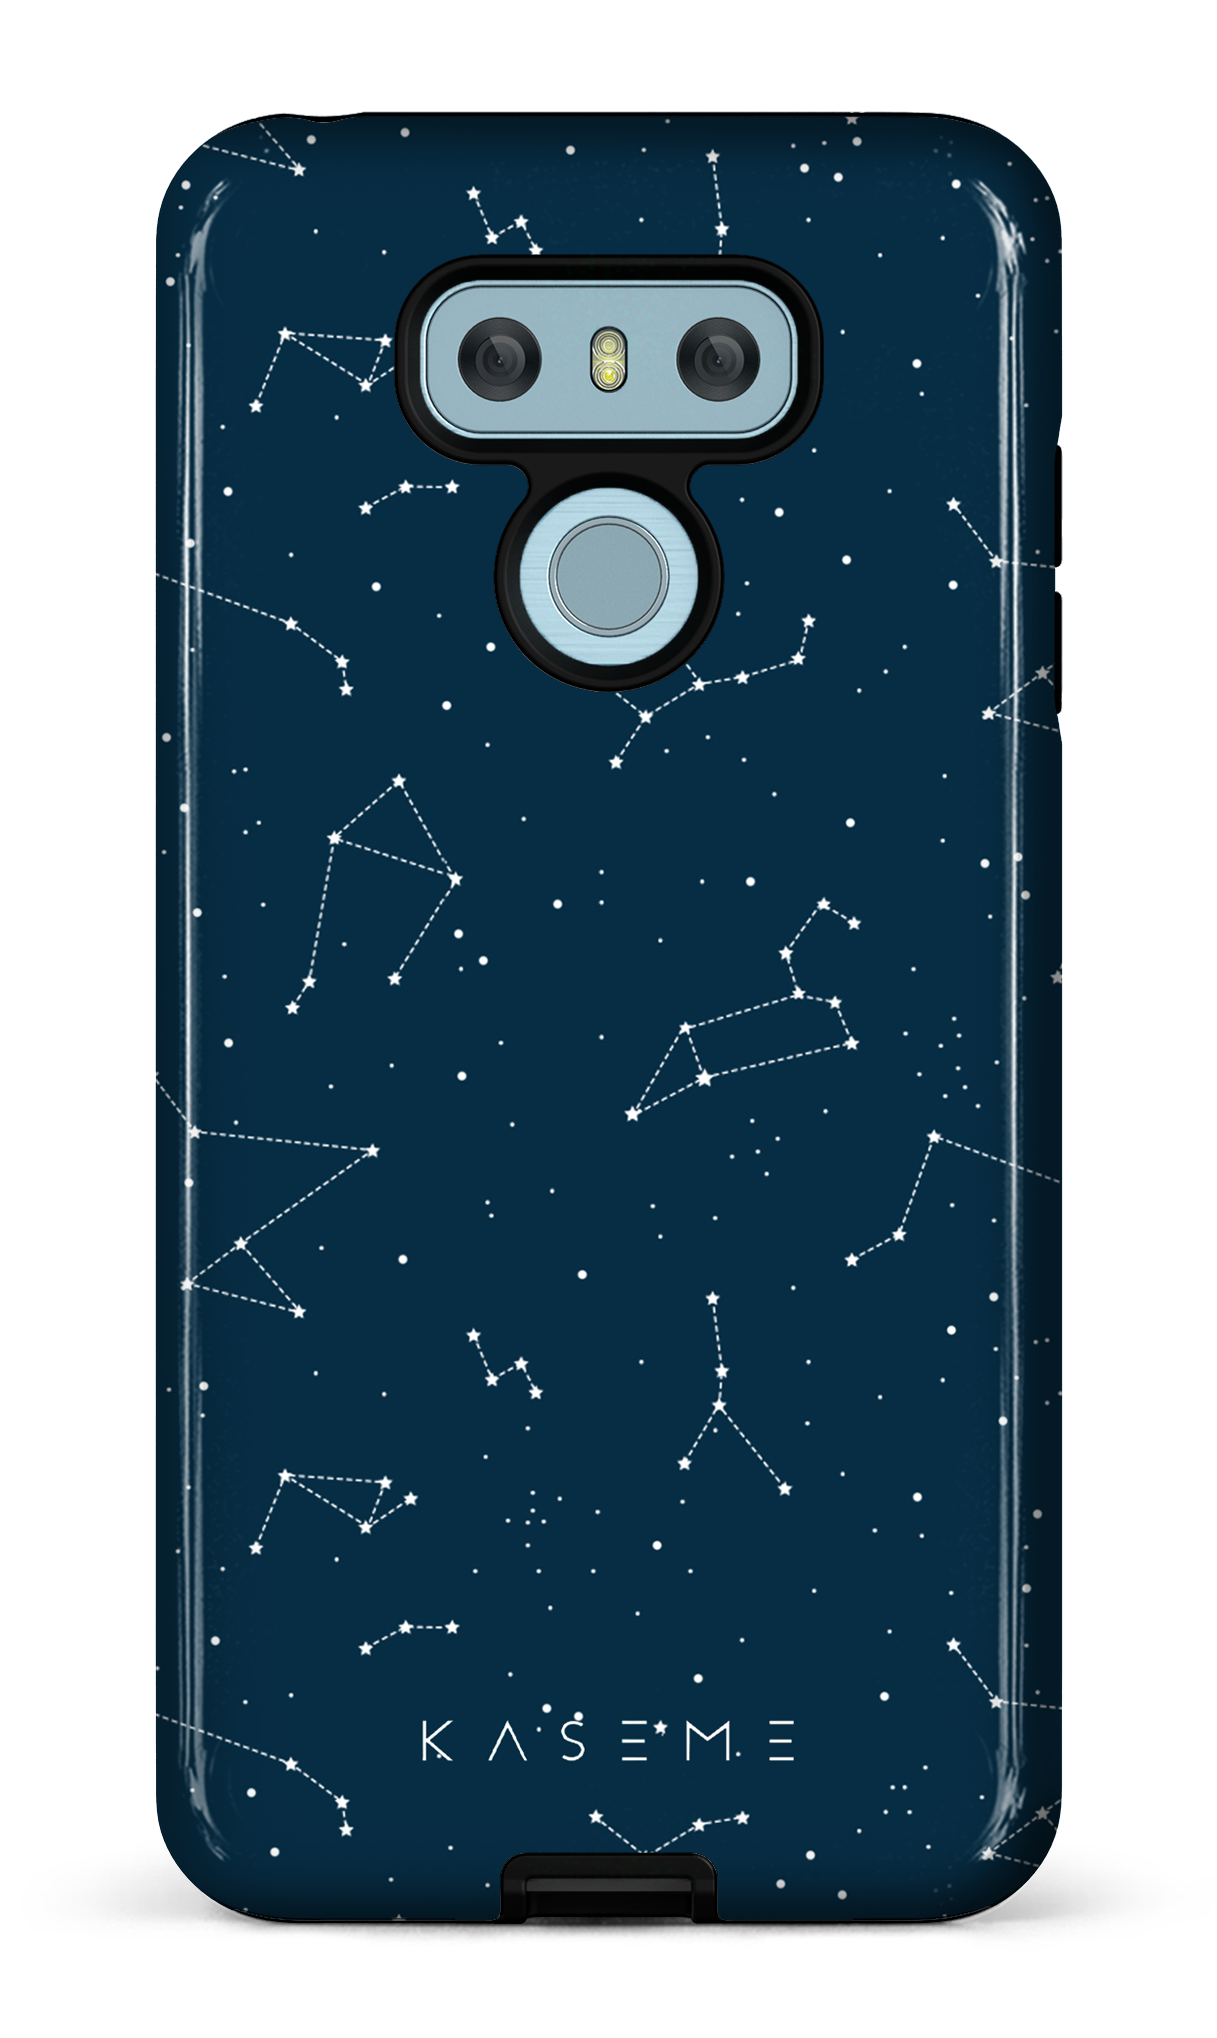 Cosmos - LG G6